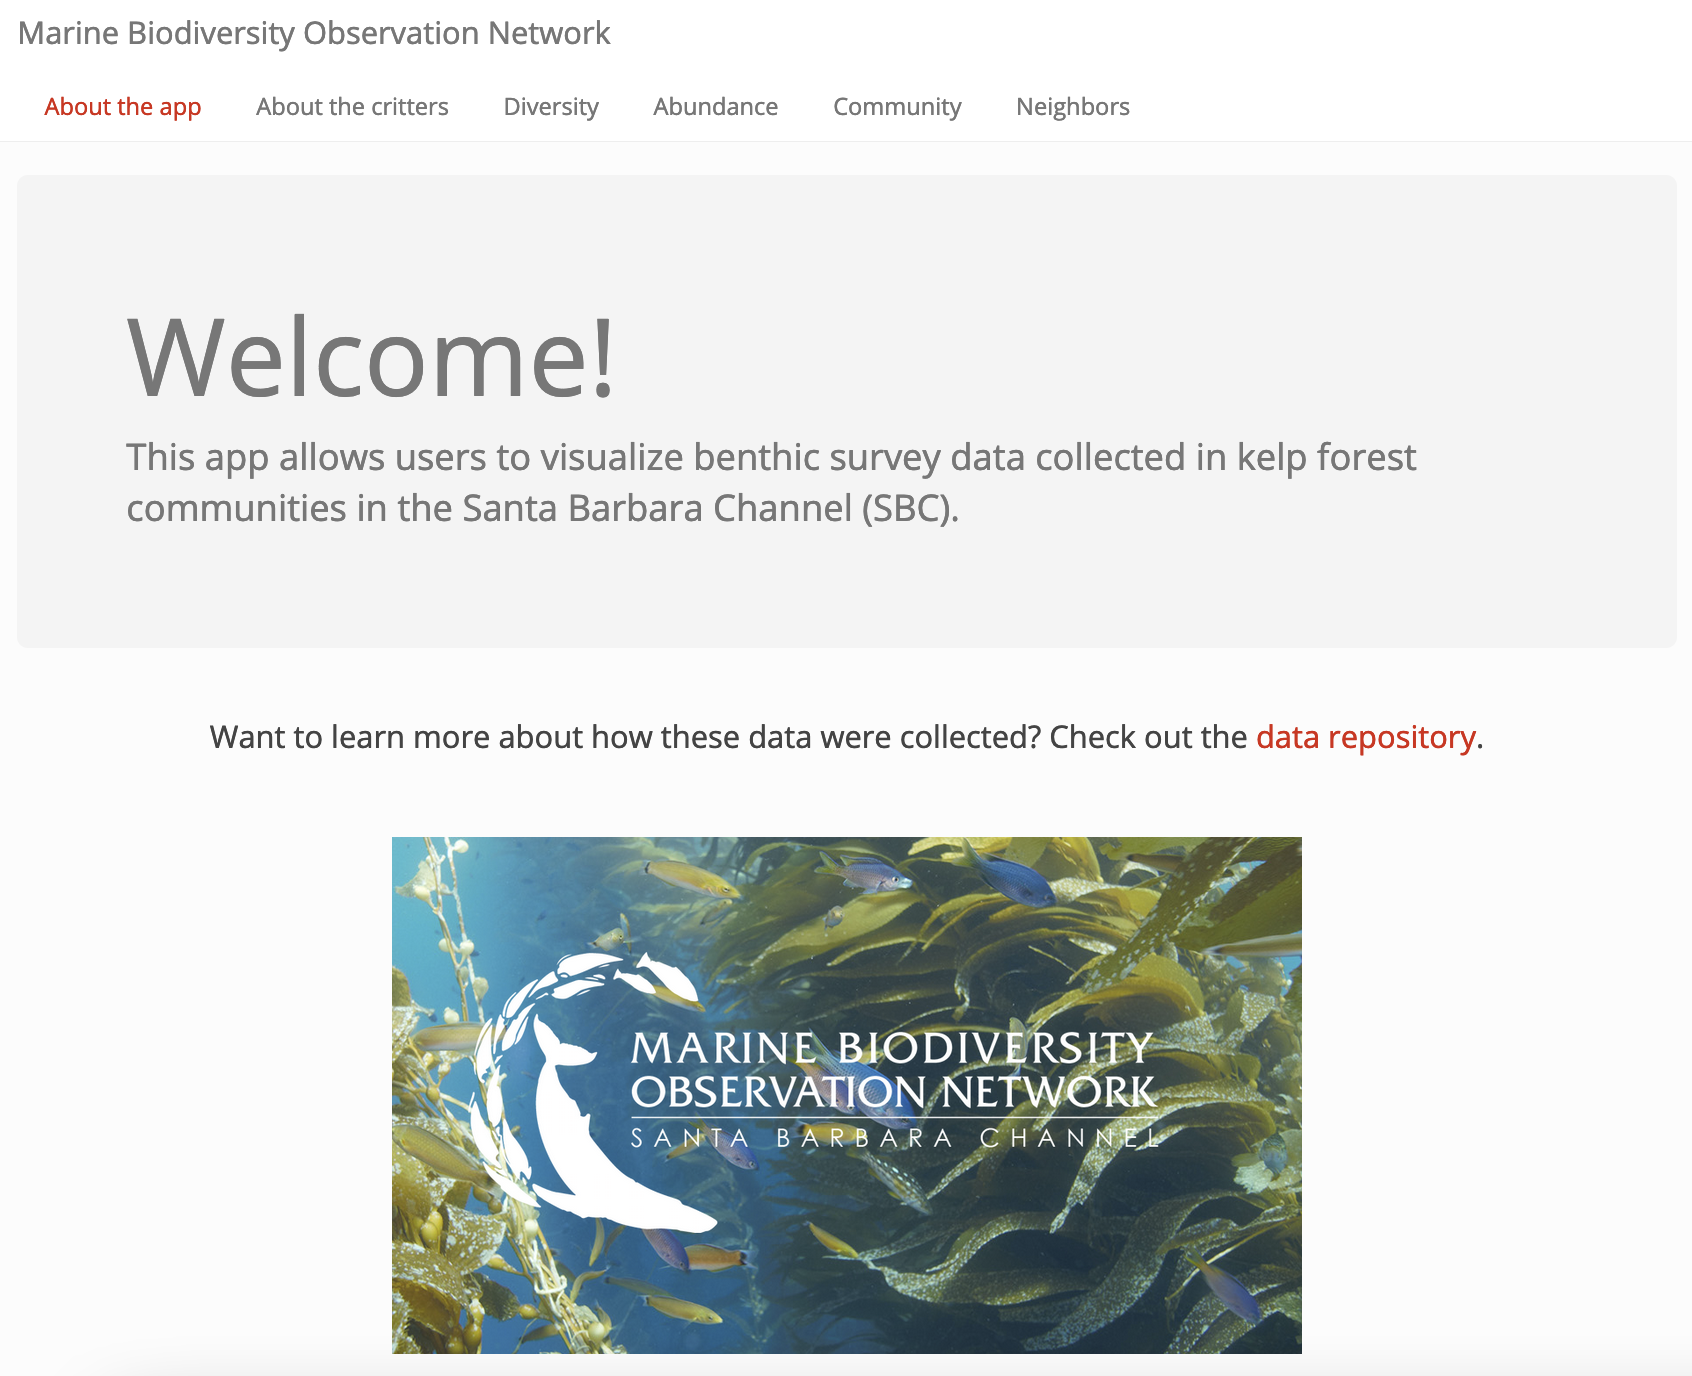 Shiny App for the Marine Biodiversity Observation Network